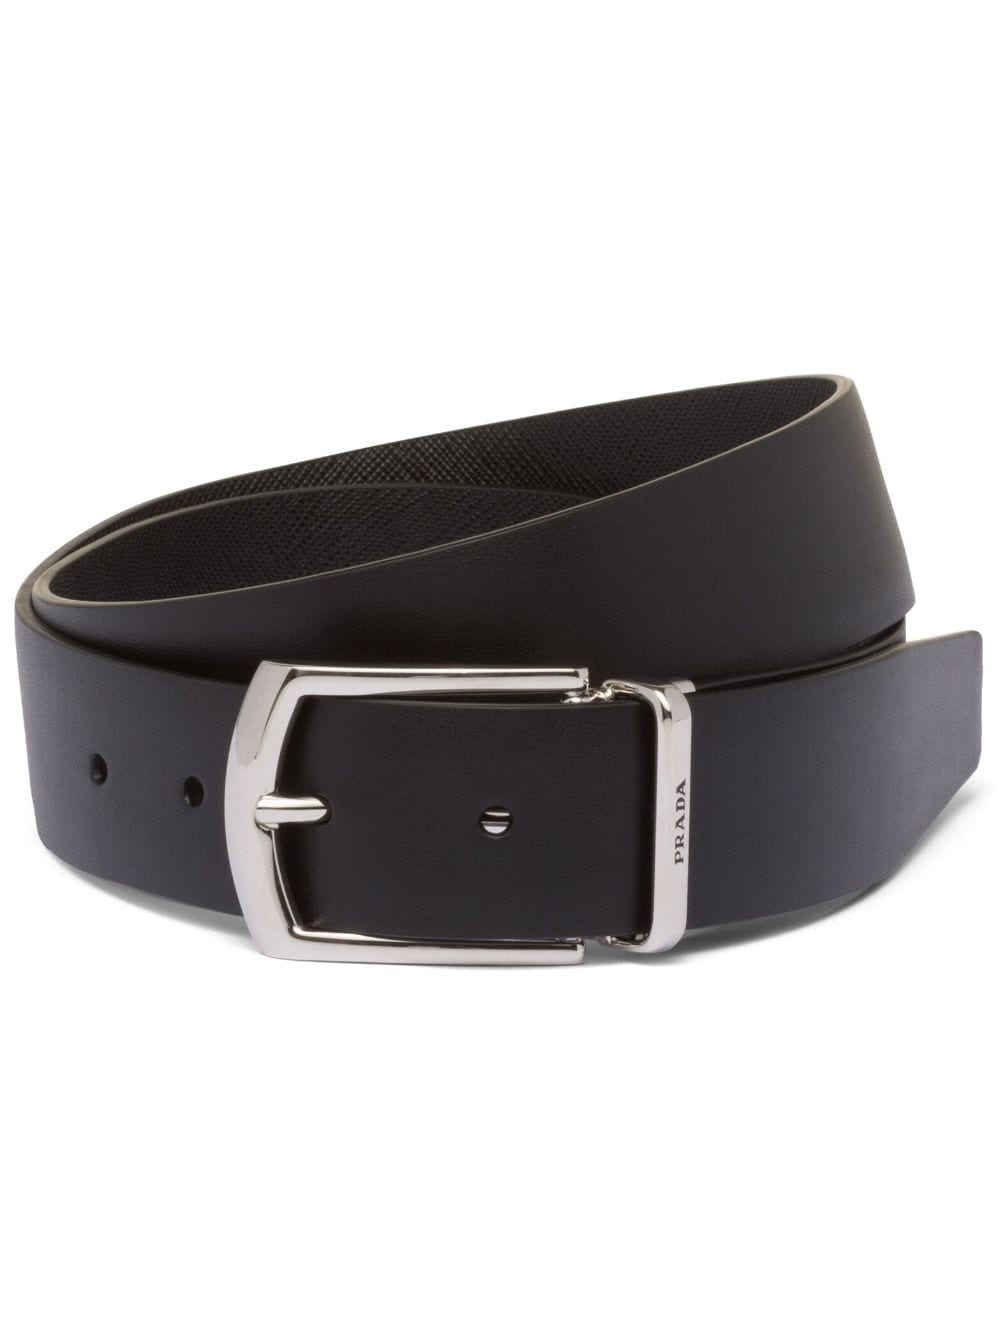 Prada reversible leather belt - Black von Prada